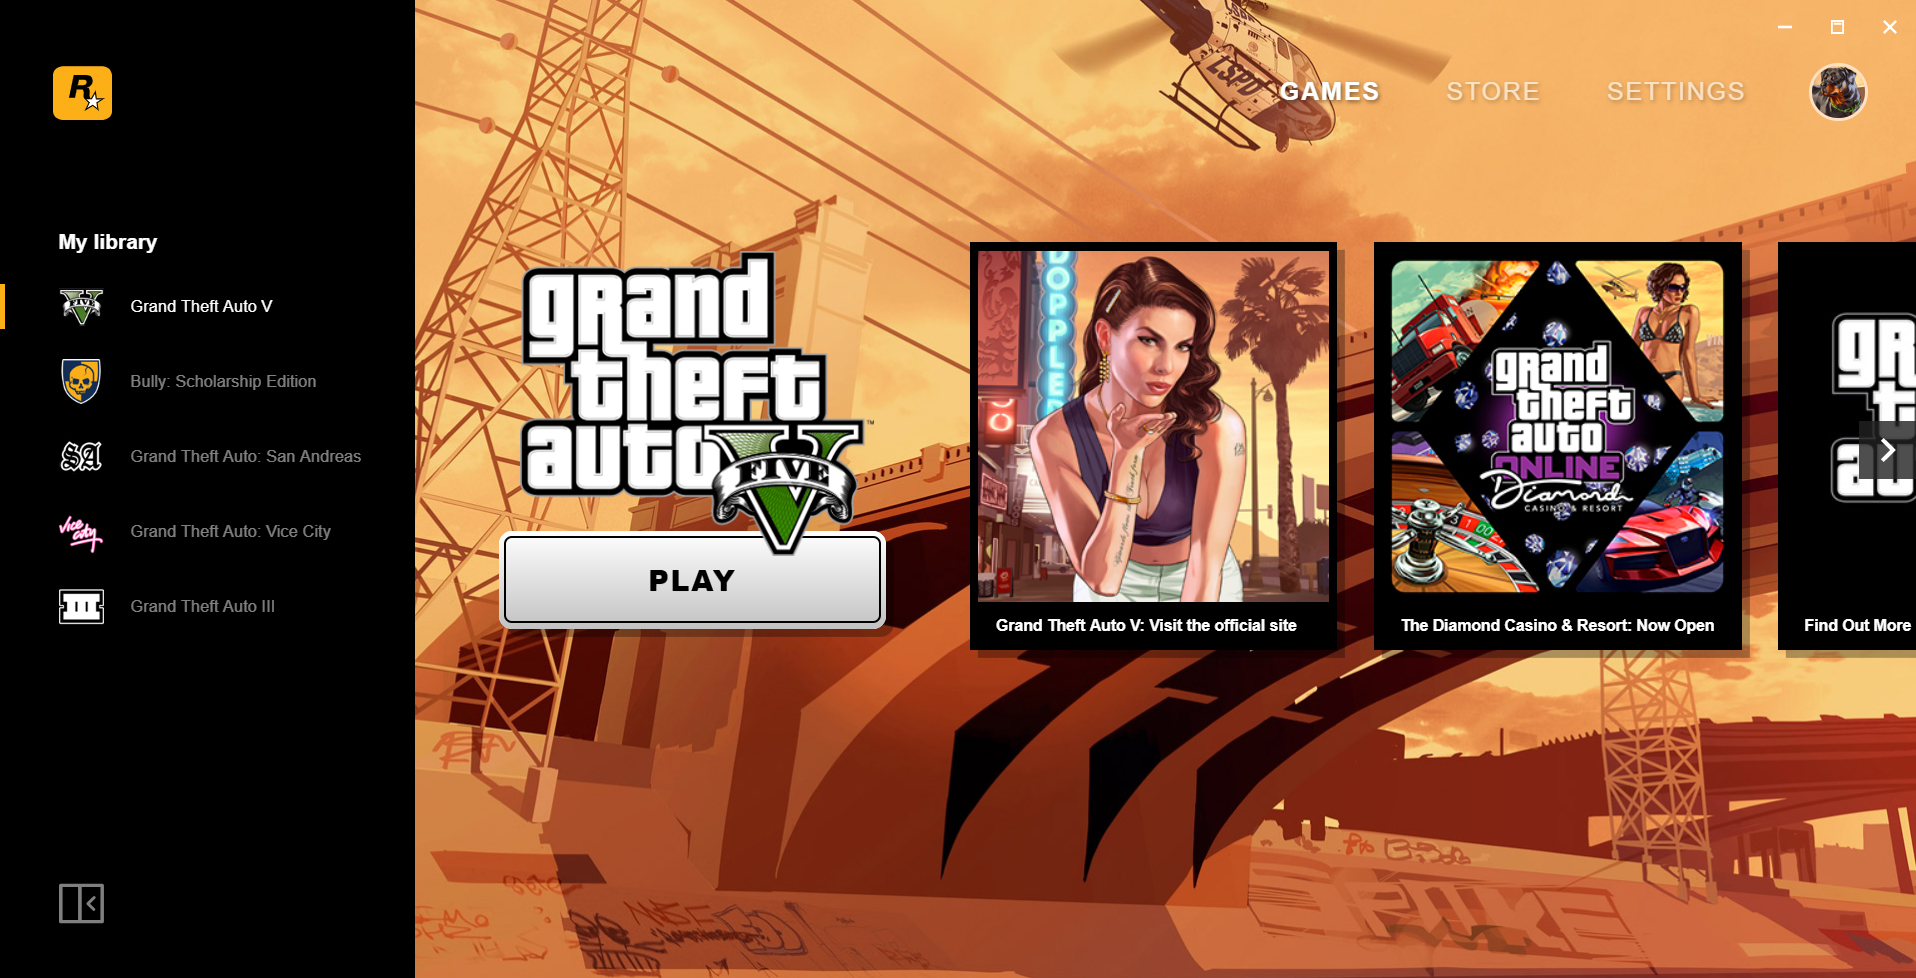 Max Payne 3 Rockstar Games Social Club digital for Windows